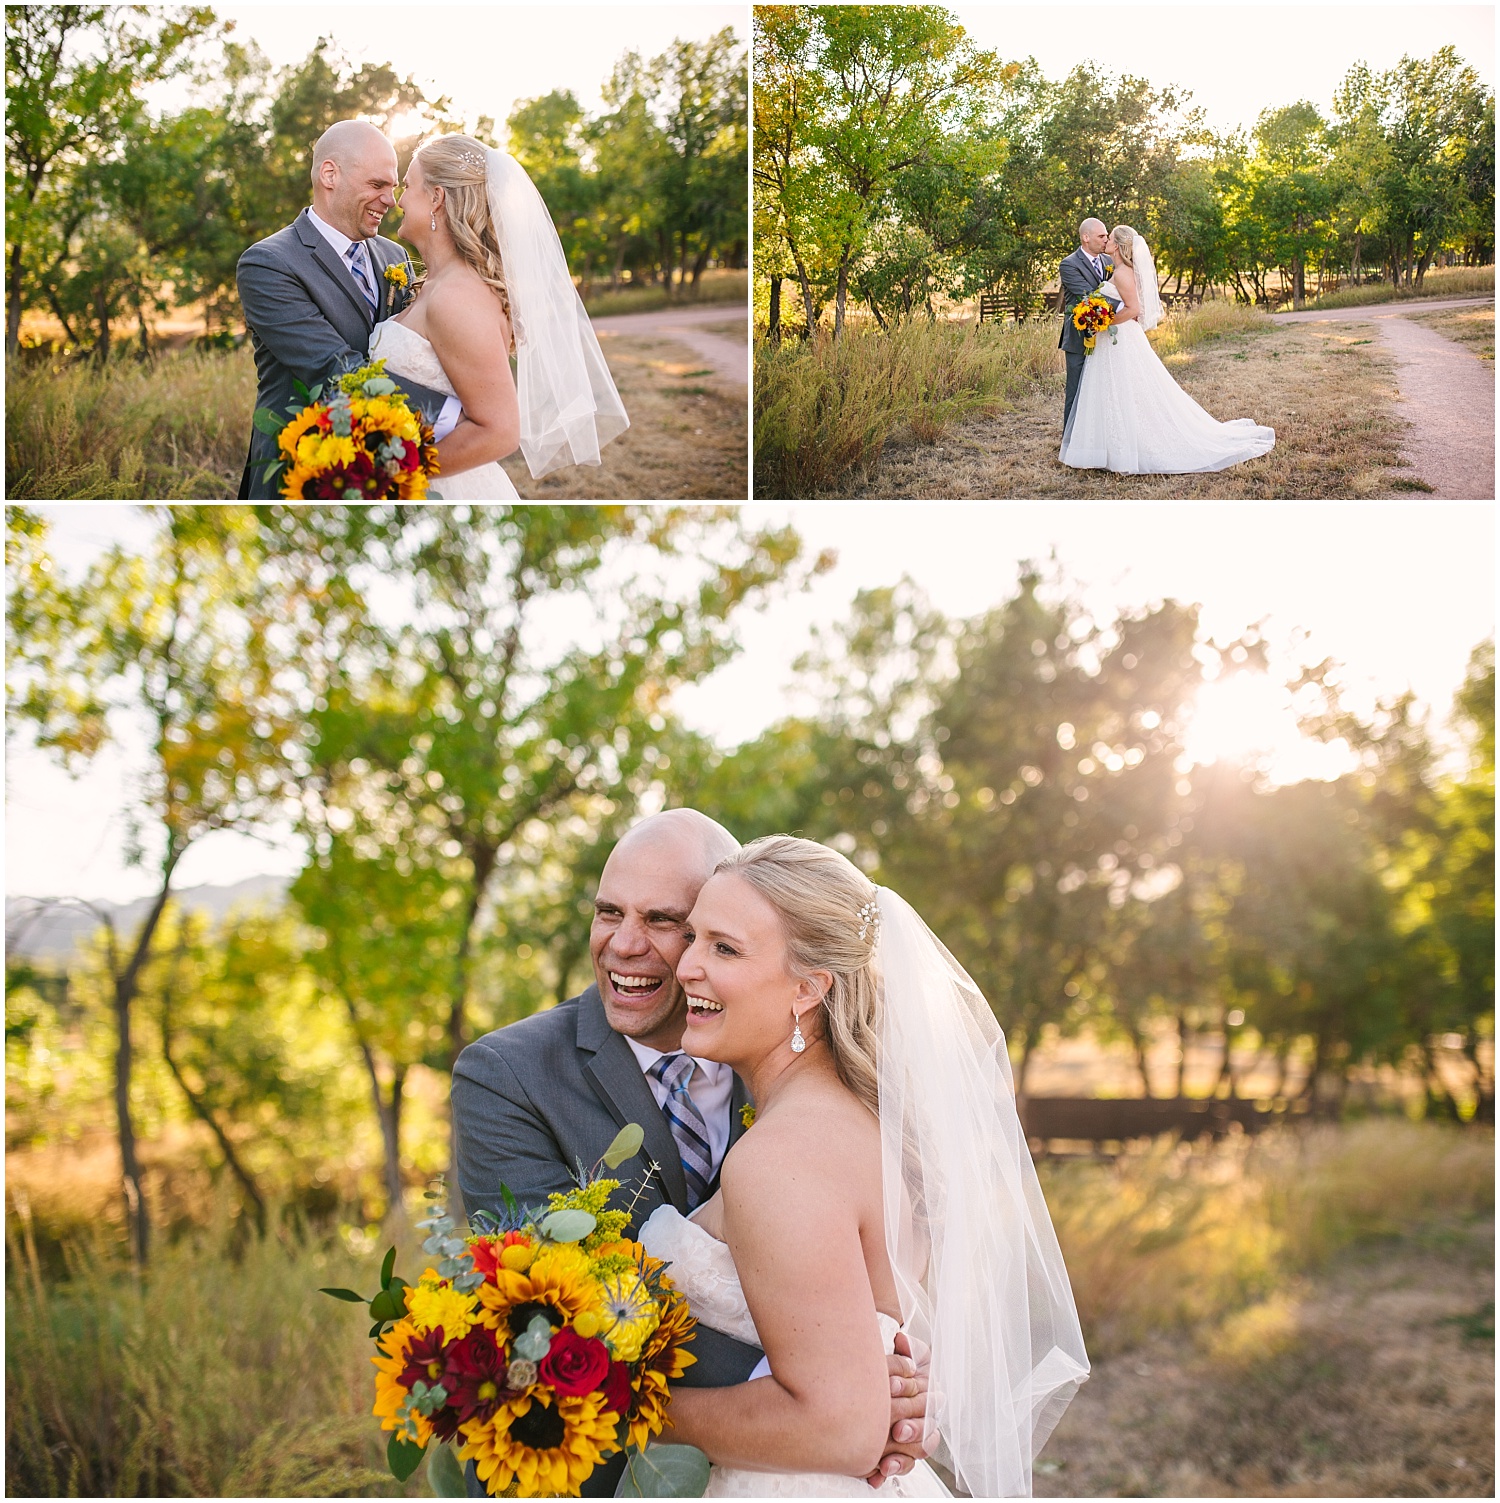 Bear Creek Park wedding portraits at golden hour in Colorado Springs